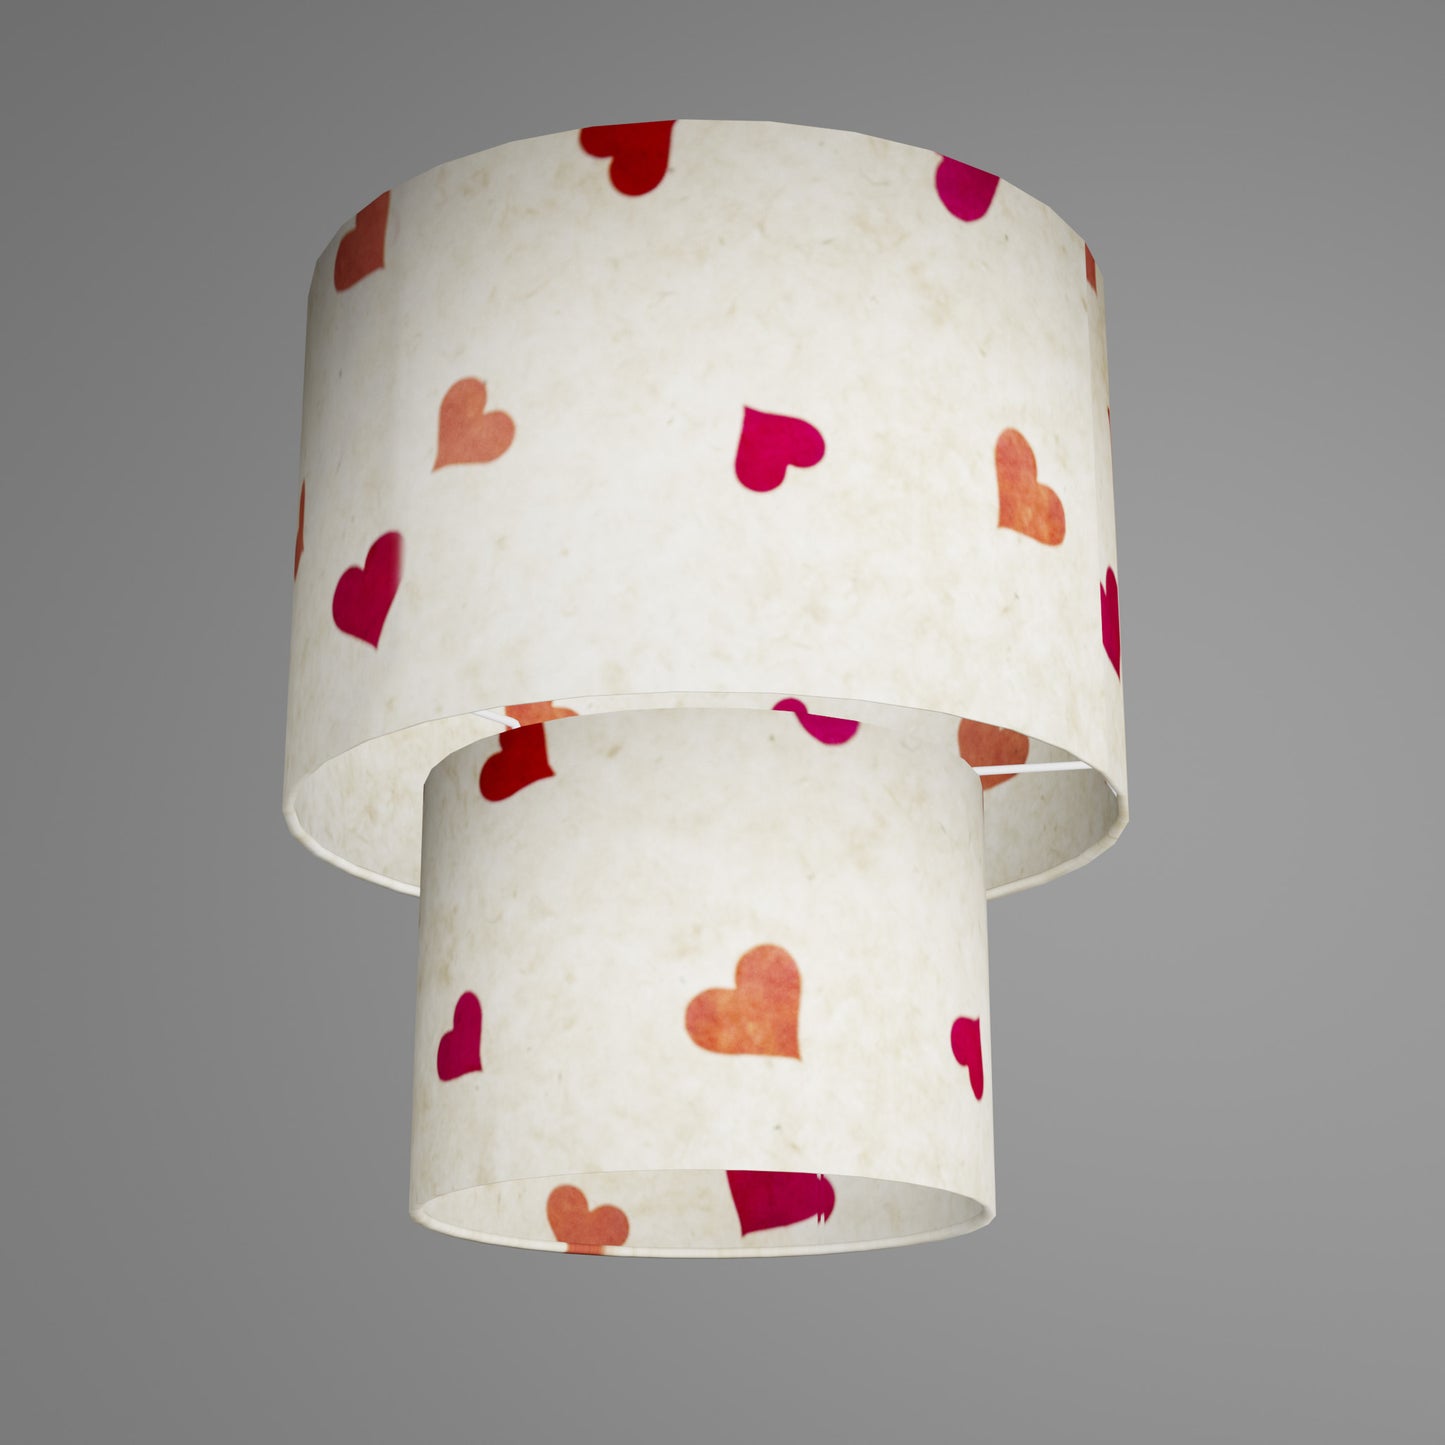 2 Tier Lamp Shade - P82 - Hearts on Lokta Paper, 30cm x 20cm & 20cm x 15cm